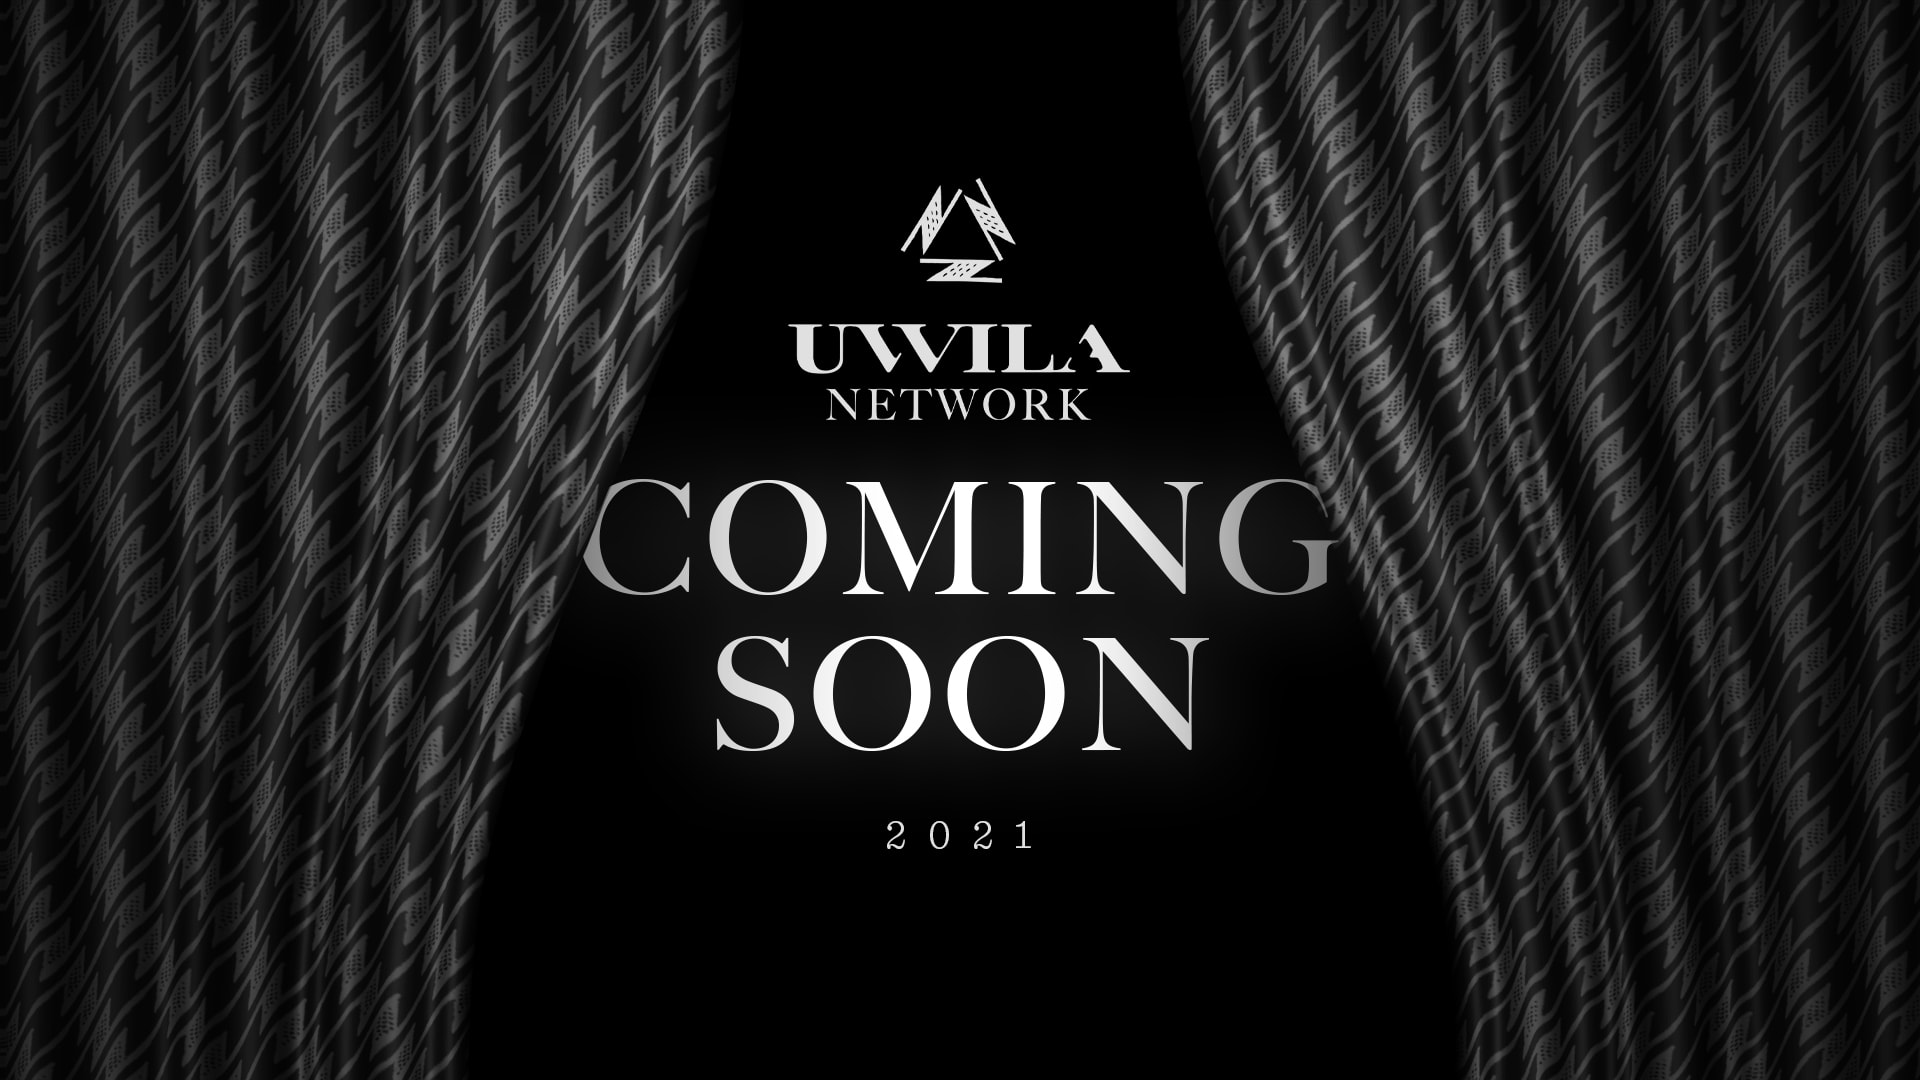 Uwila Network Coming Soon Banner on Black Background